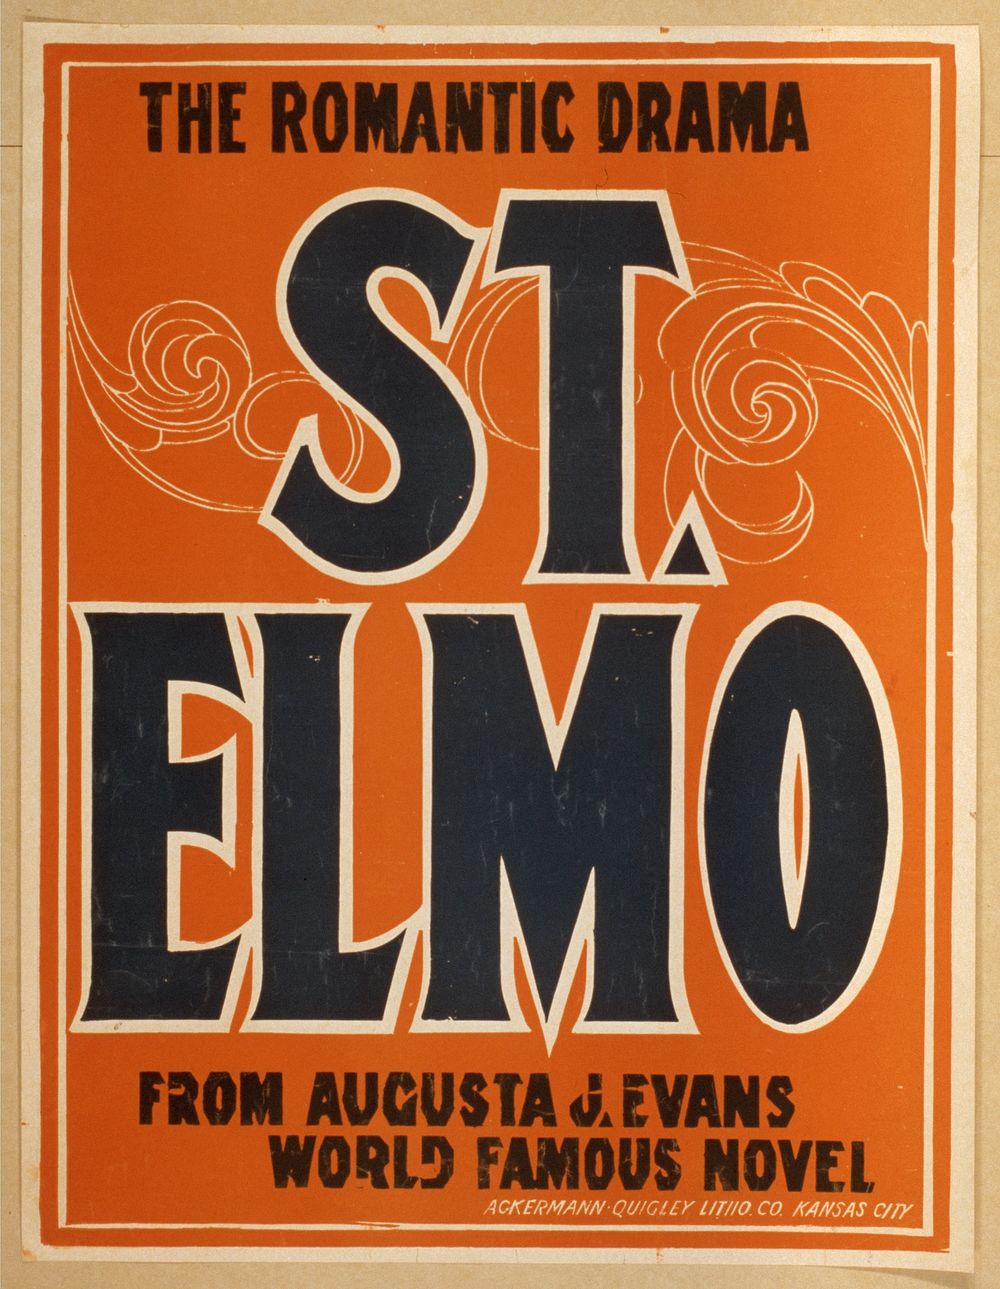 St. Elmo the romantic drama : from Augusta J. Evans world famous novel.